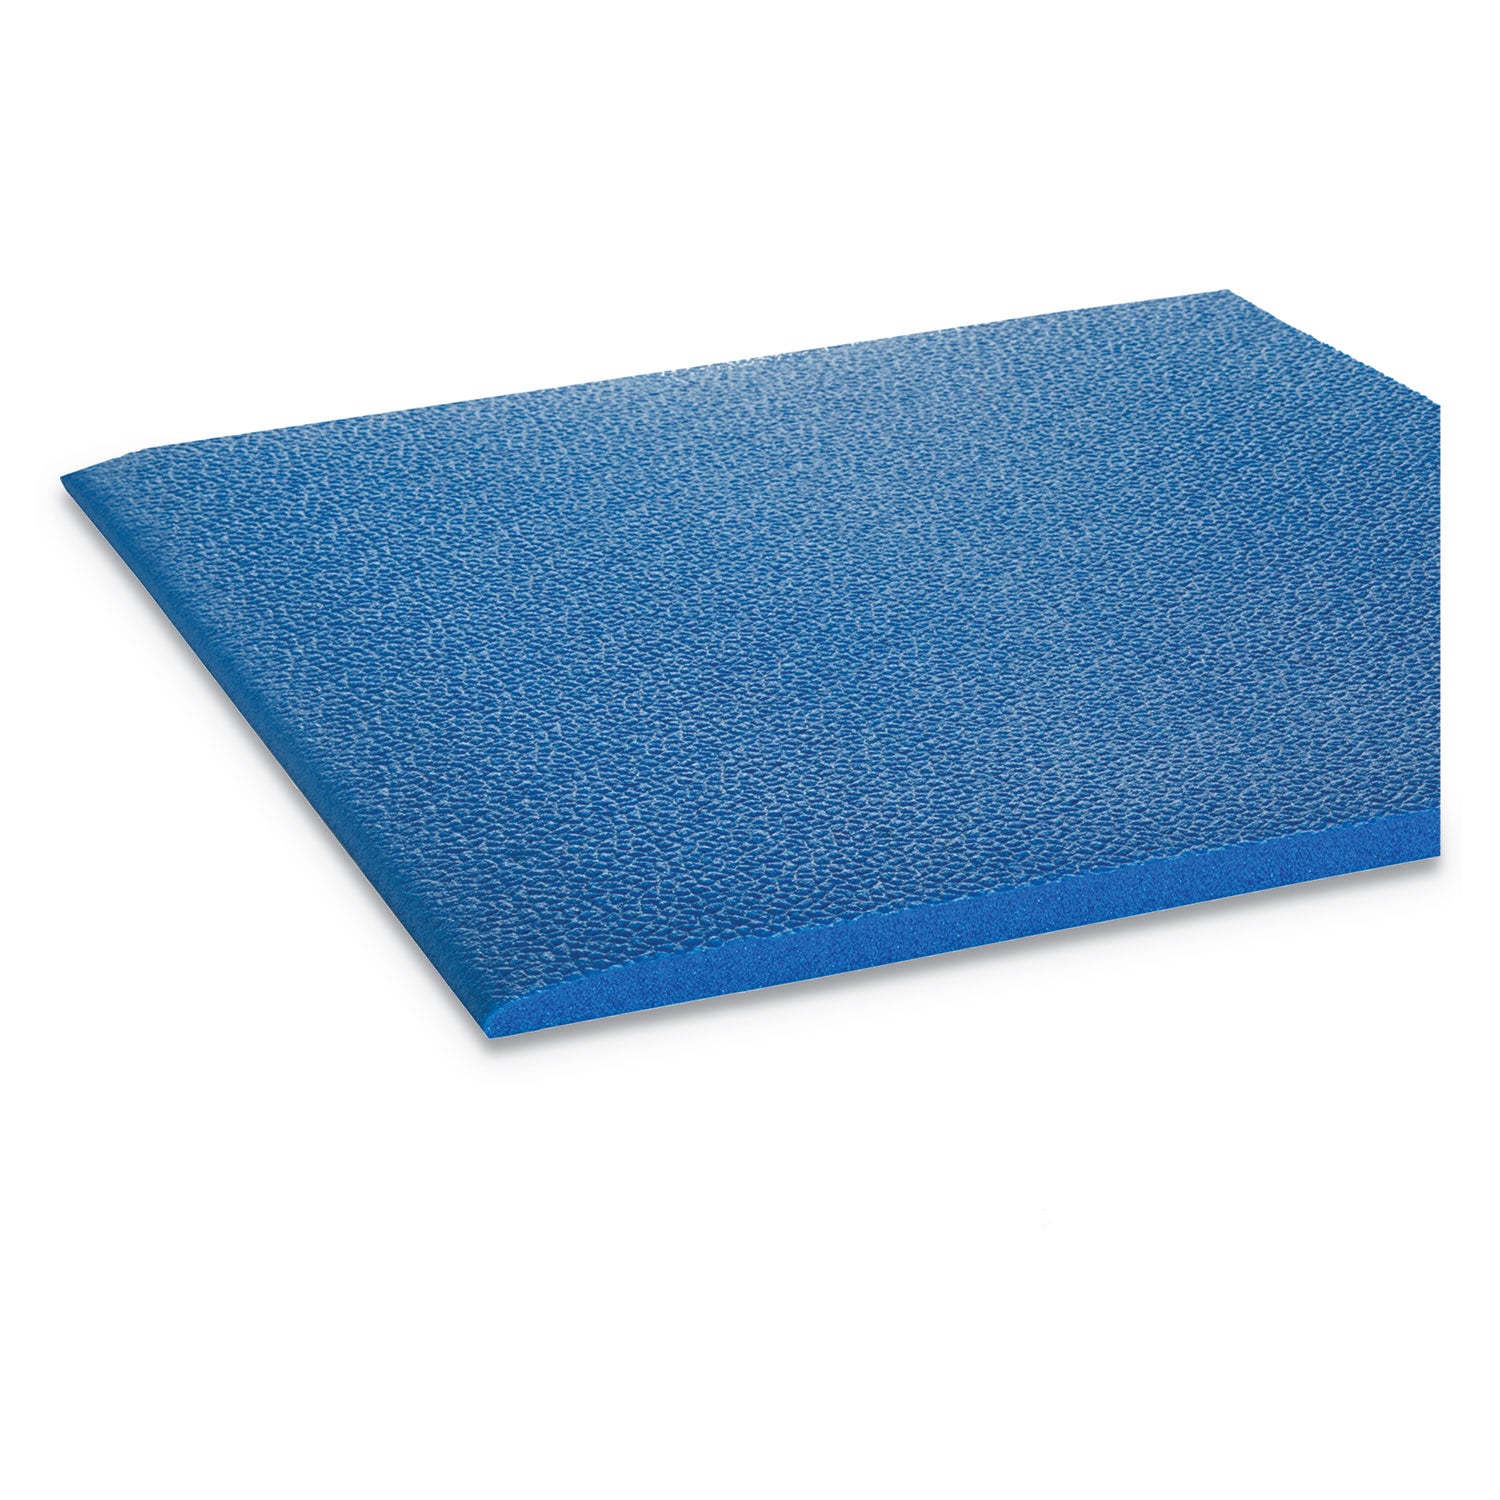 Comfort King Anti-Fatigue Mat, Zedlan, 24 x 36, Royal Blue - 